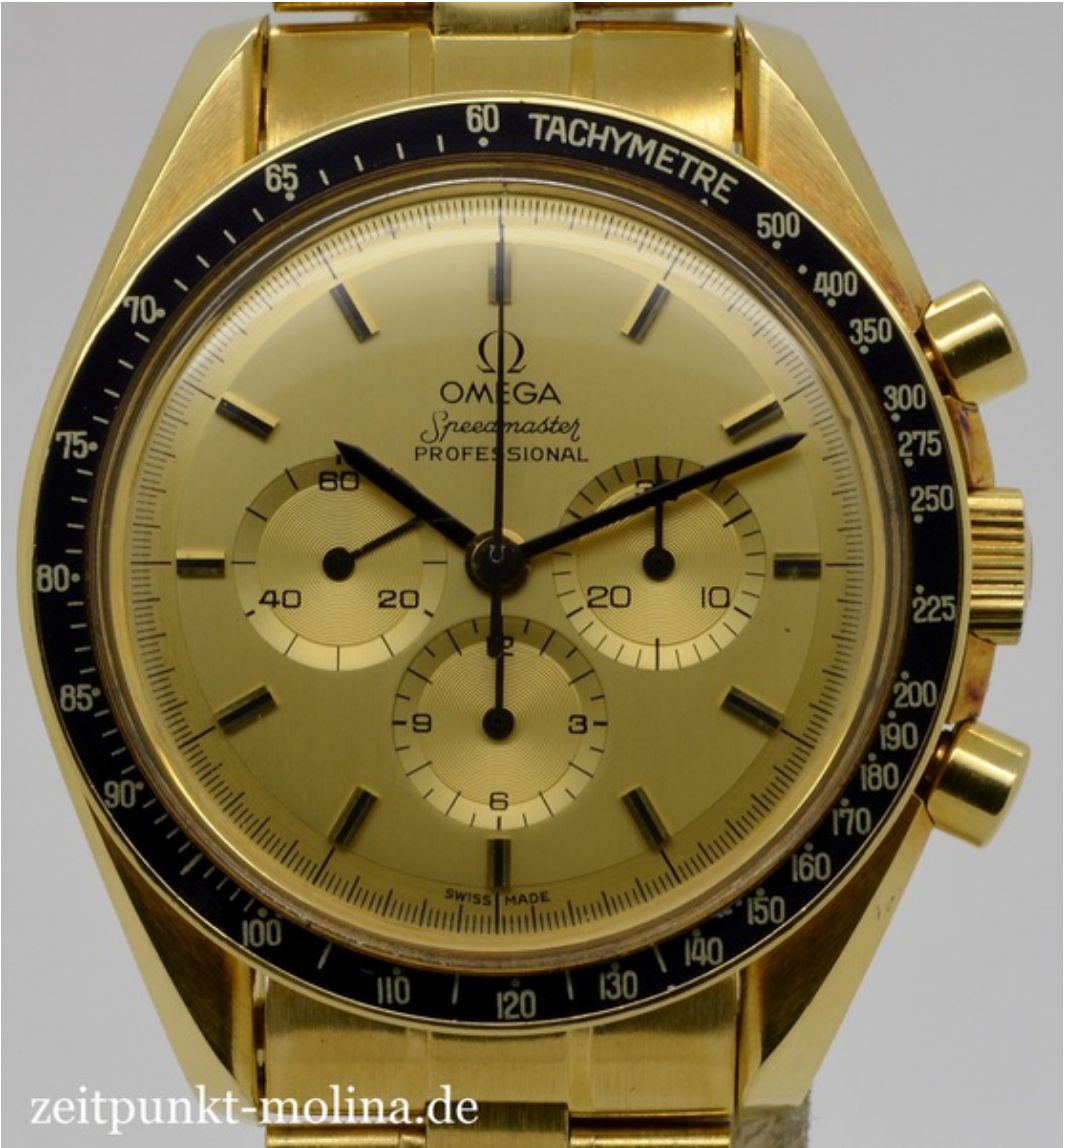 1981 omega watch